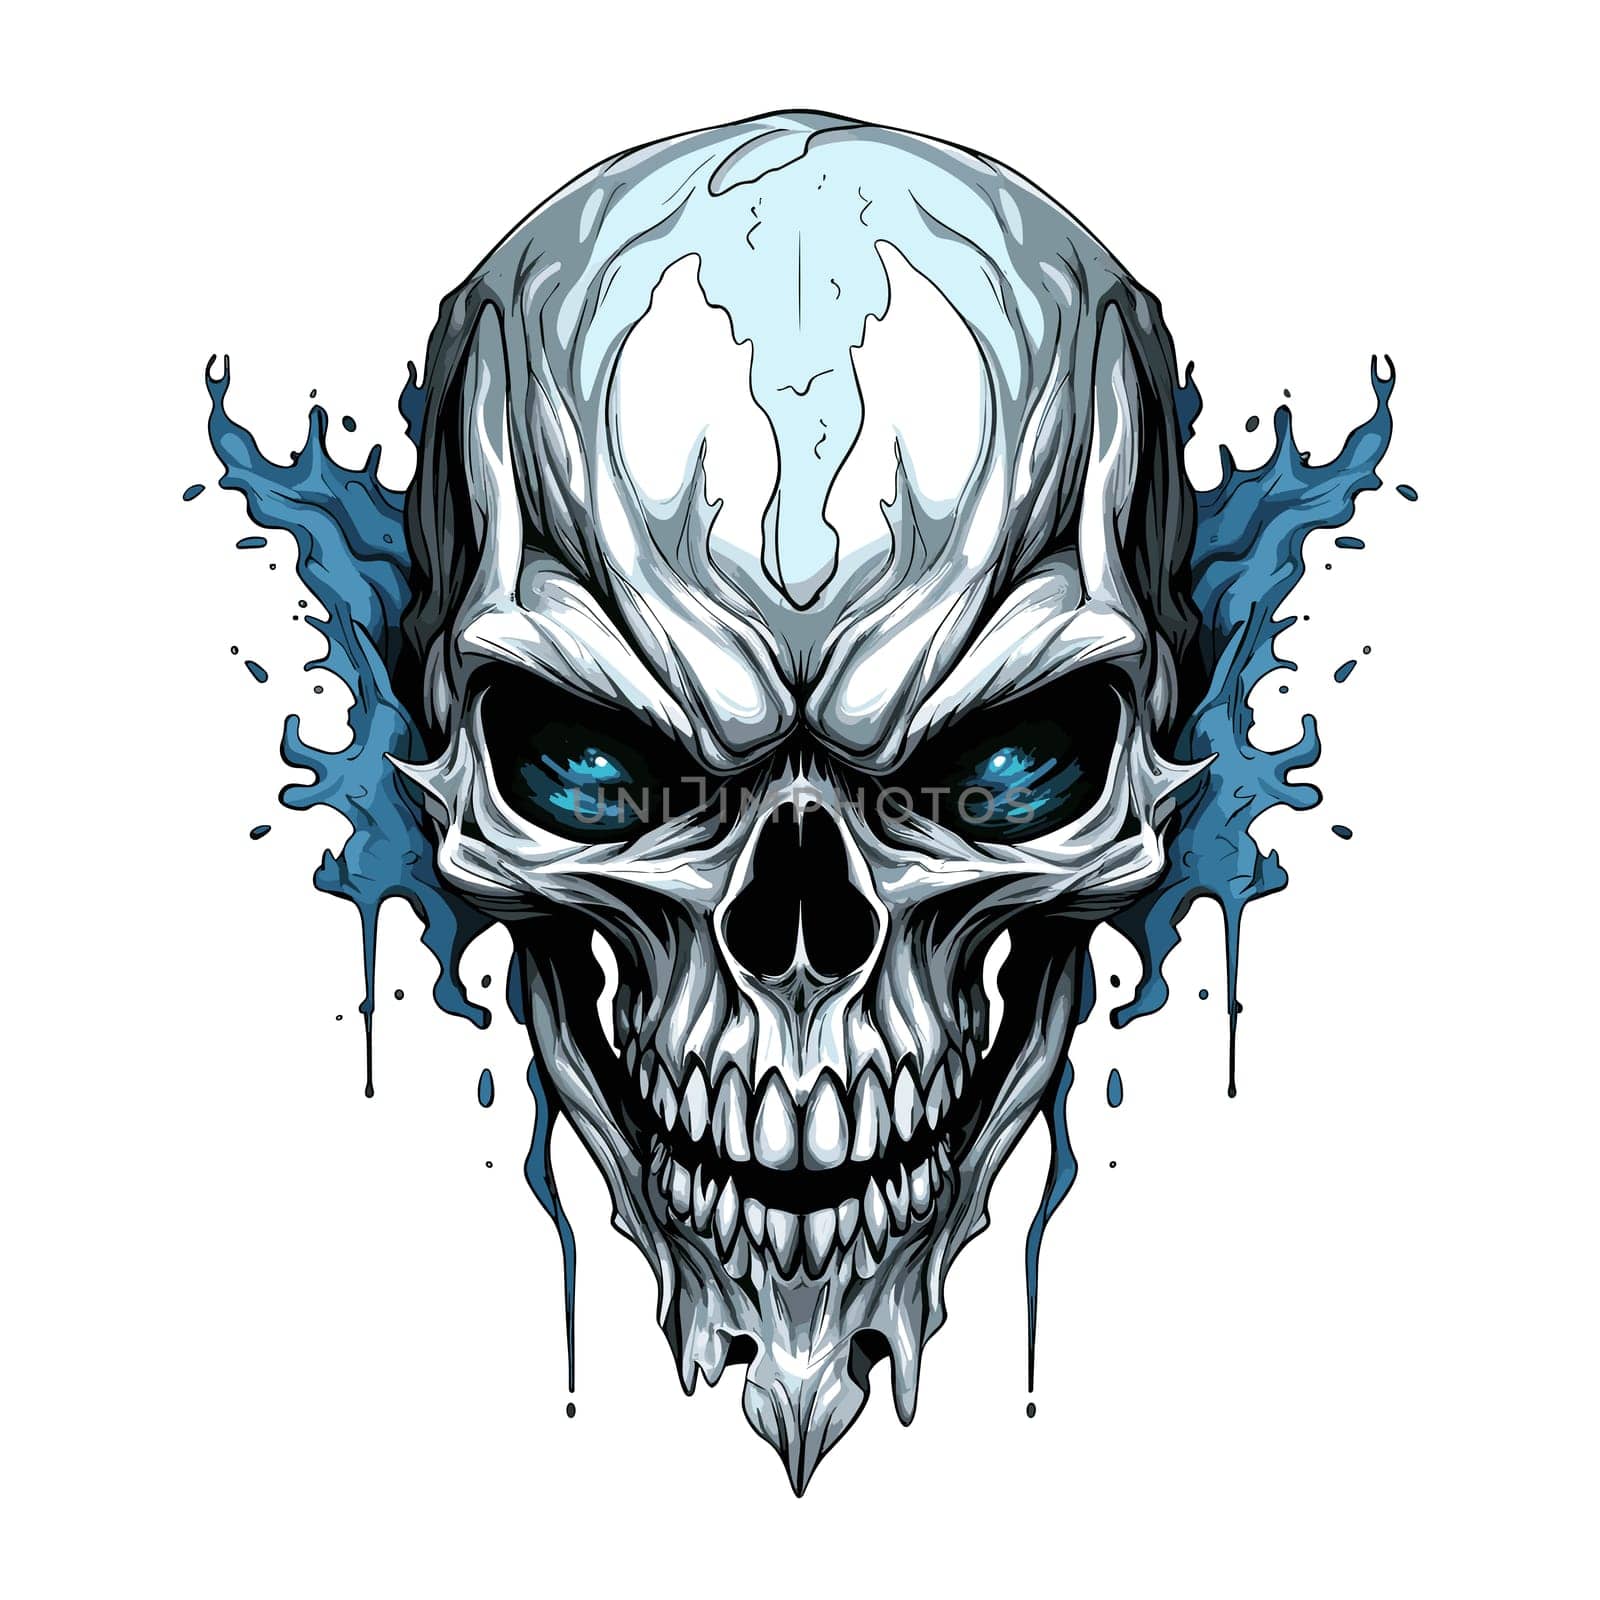 A devil's skull. Mystical illustration in vector pop art style. Template for t-shirt print, sticker, poster, etc.